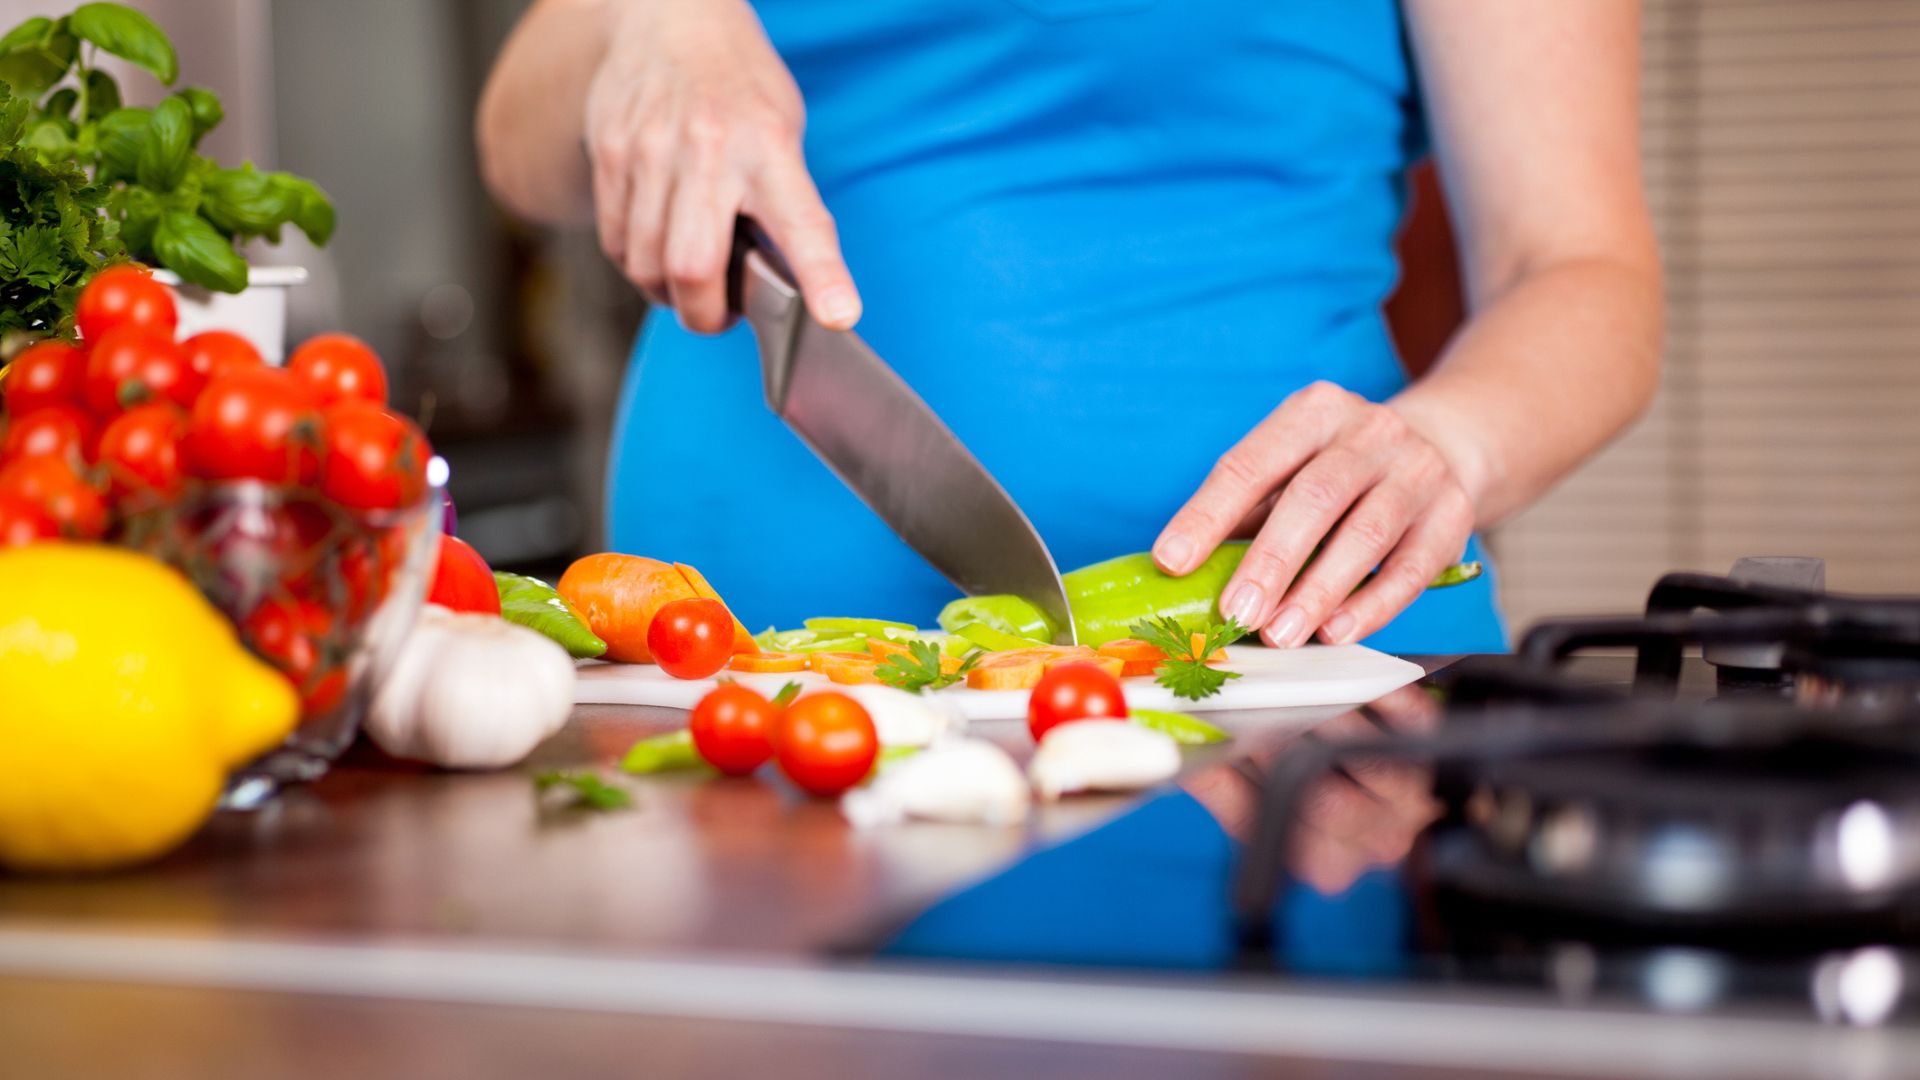 Pregnant woman chopping up fresh vegetables